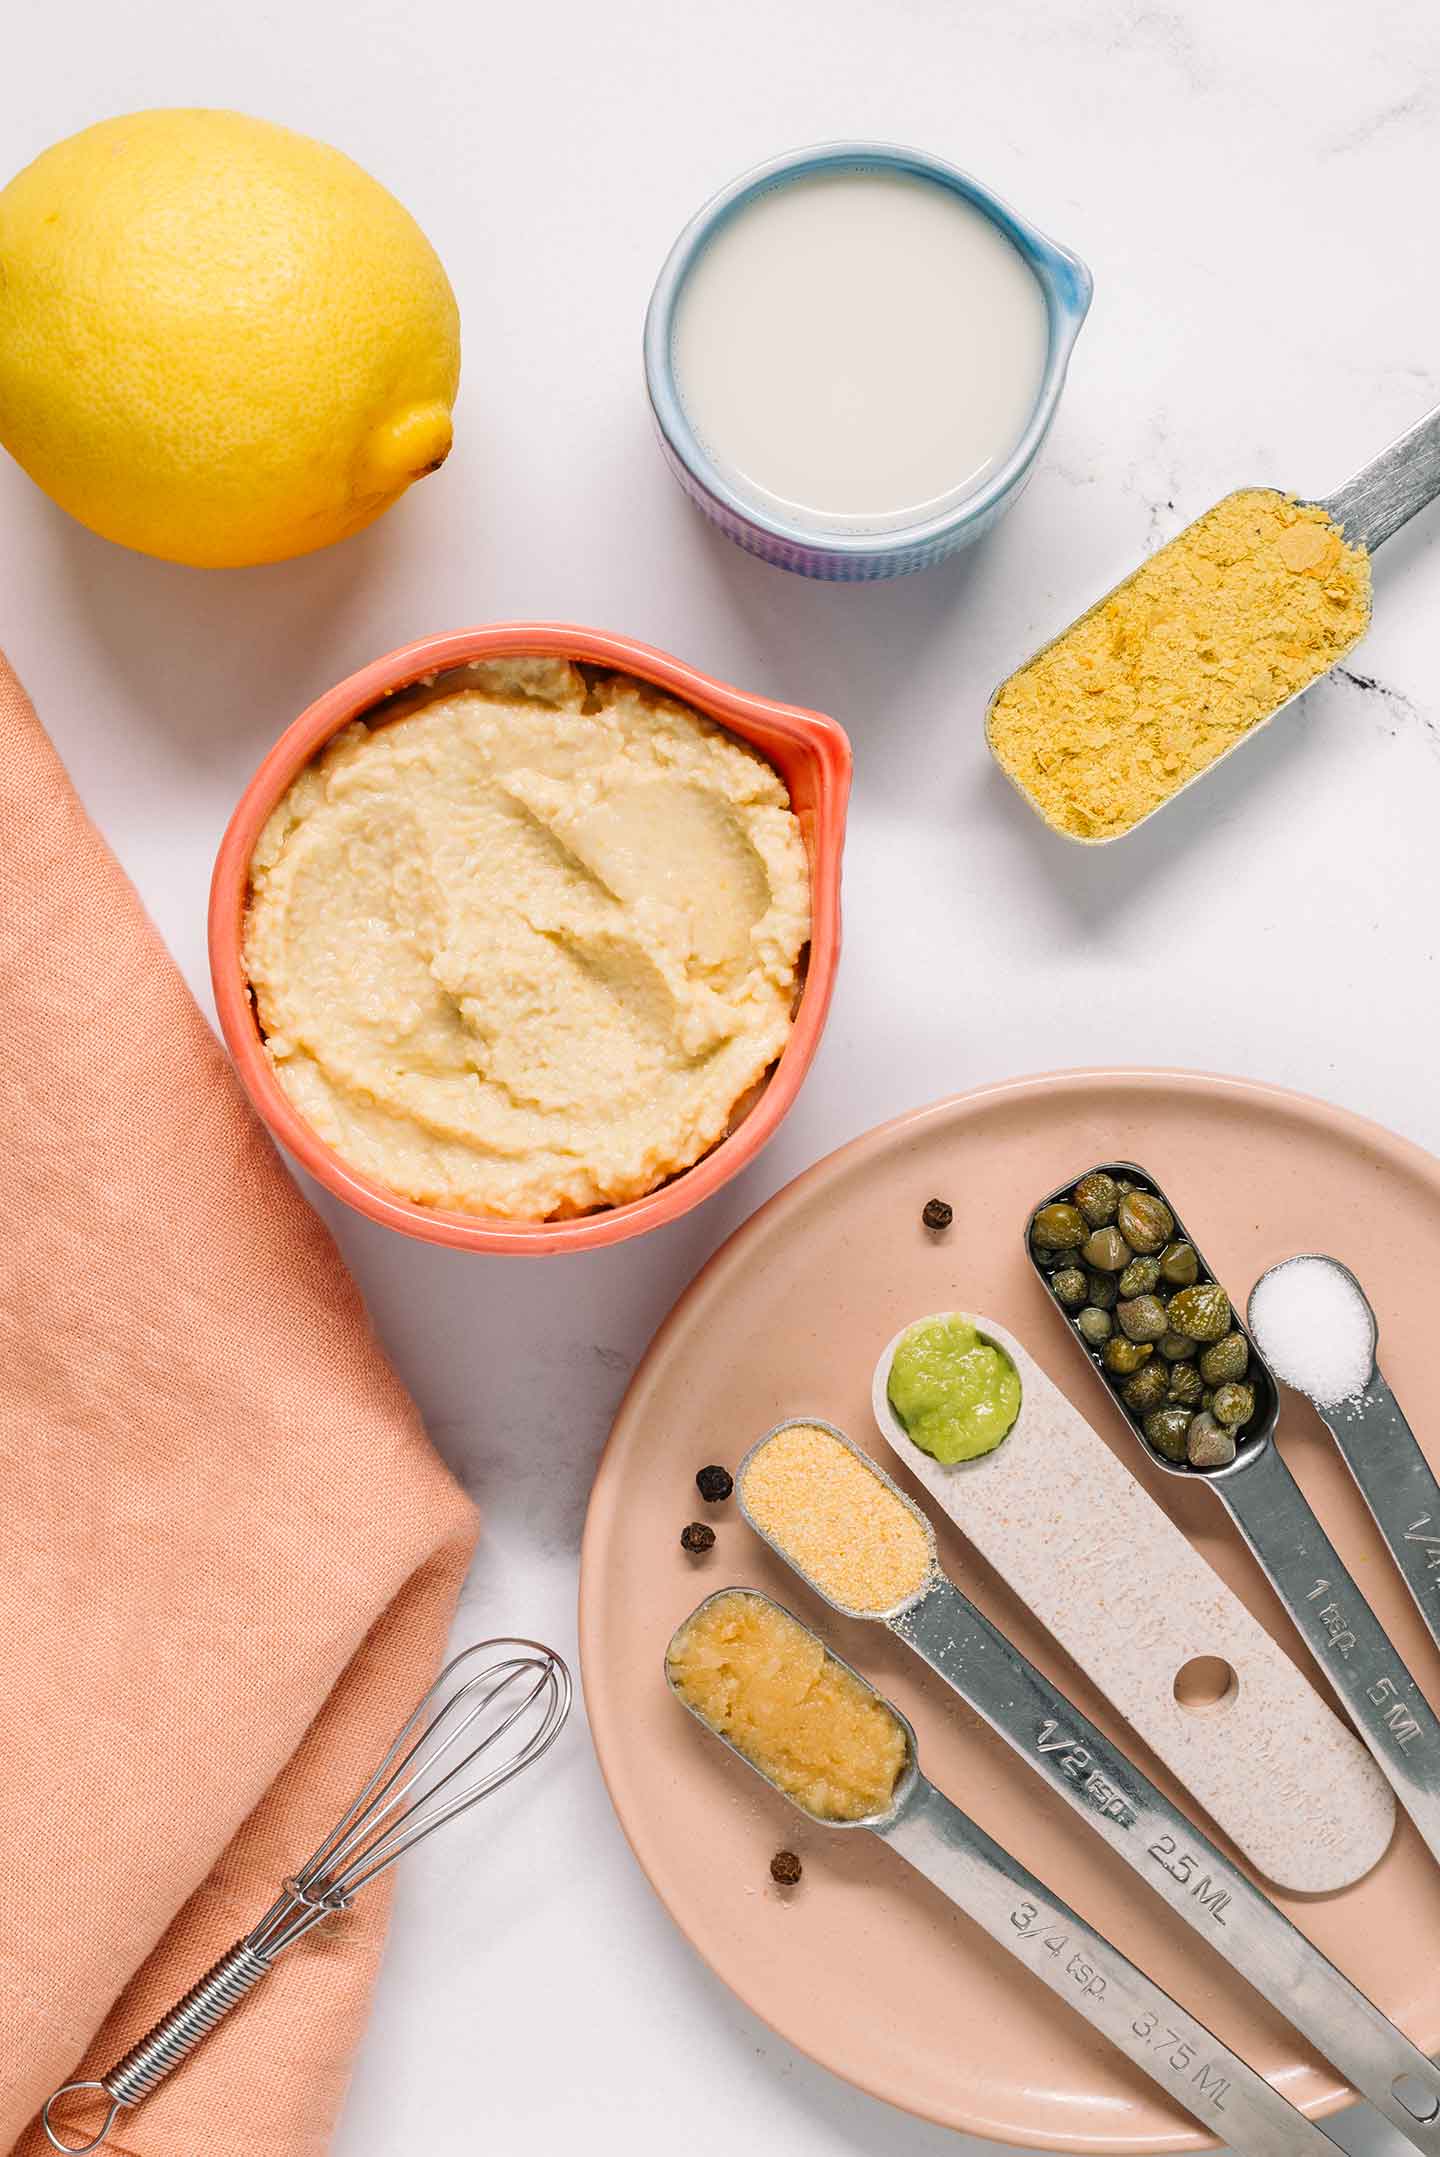 Top down view of ingredients. Hummus, lemon juice, nutritional yeast, and other seasonings fill the image.